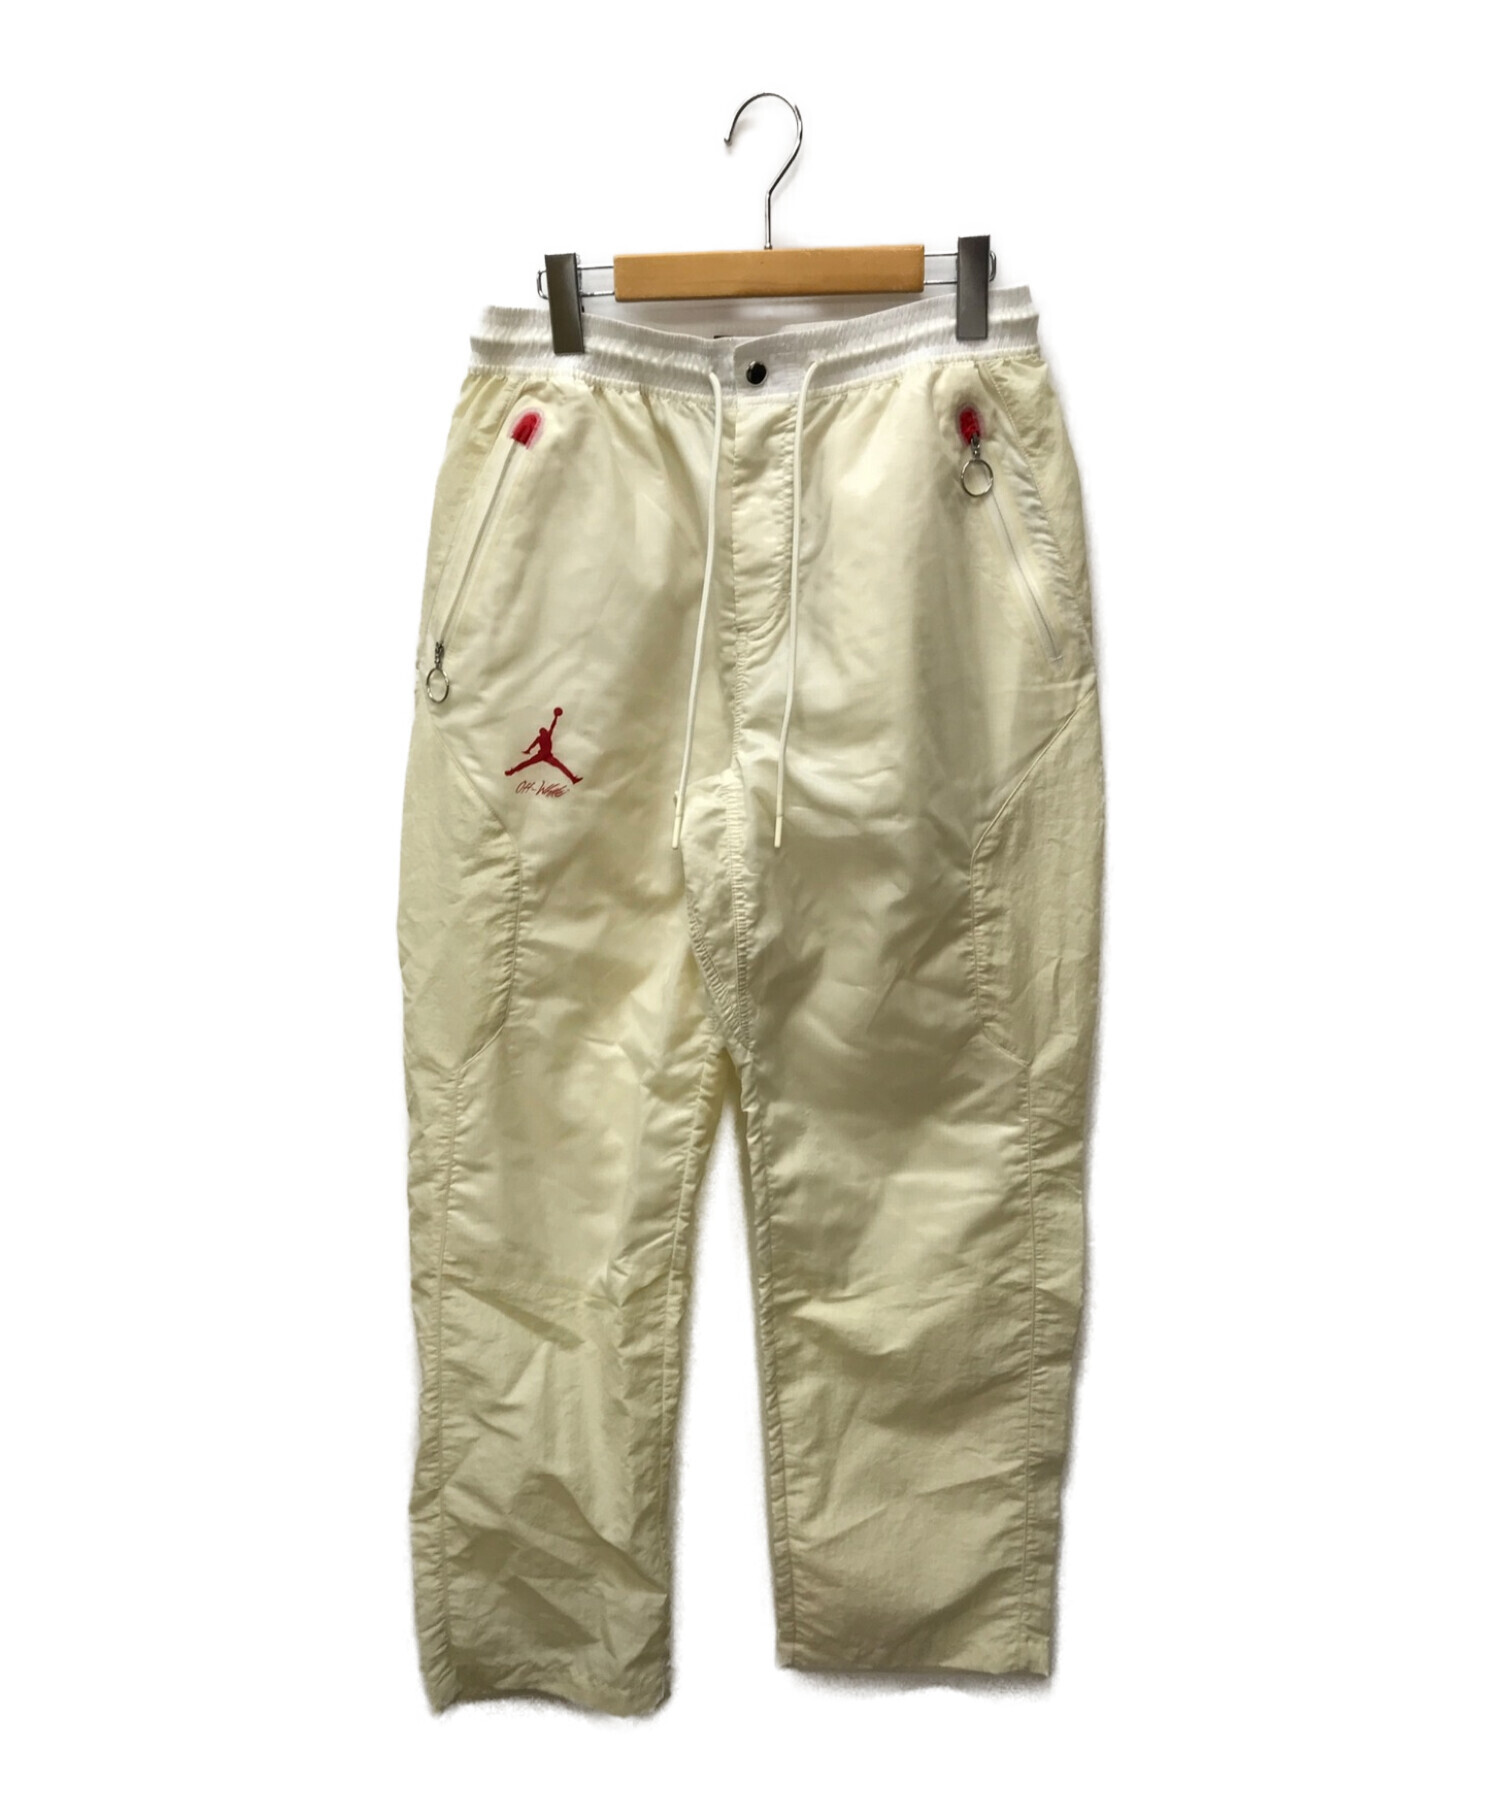 OFF-WHITE×NIKE Jordan (オフホワイト×ナイキ ジョーダン) Woven Pants アイボリー サイズ:M